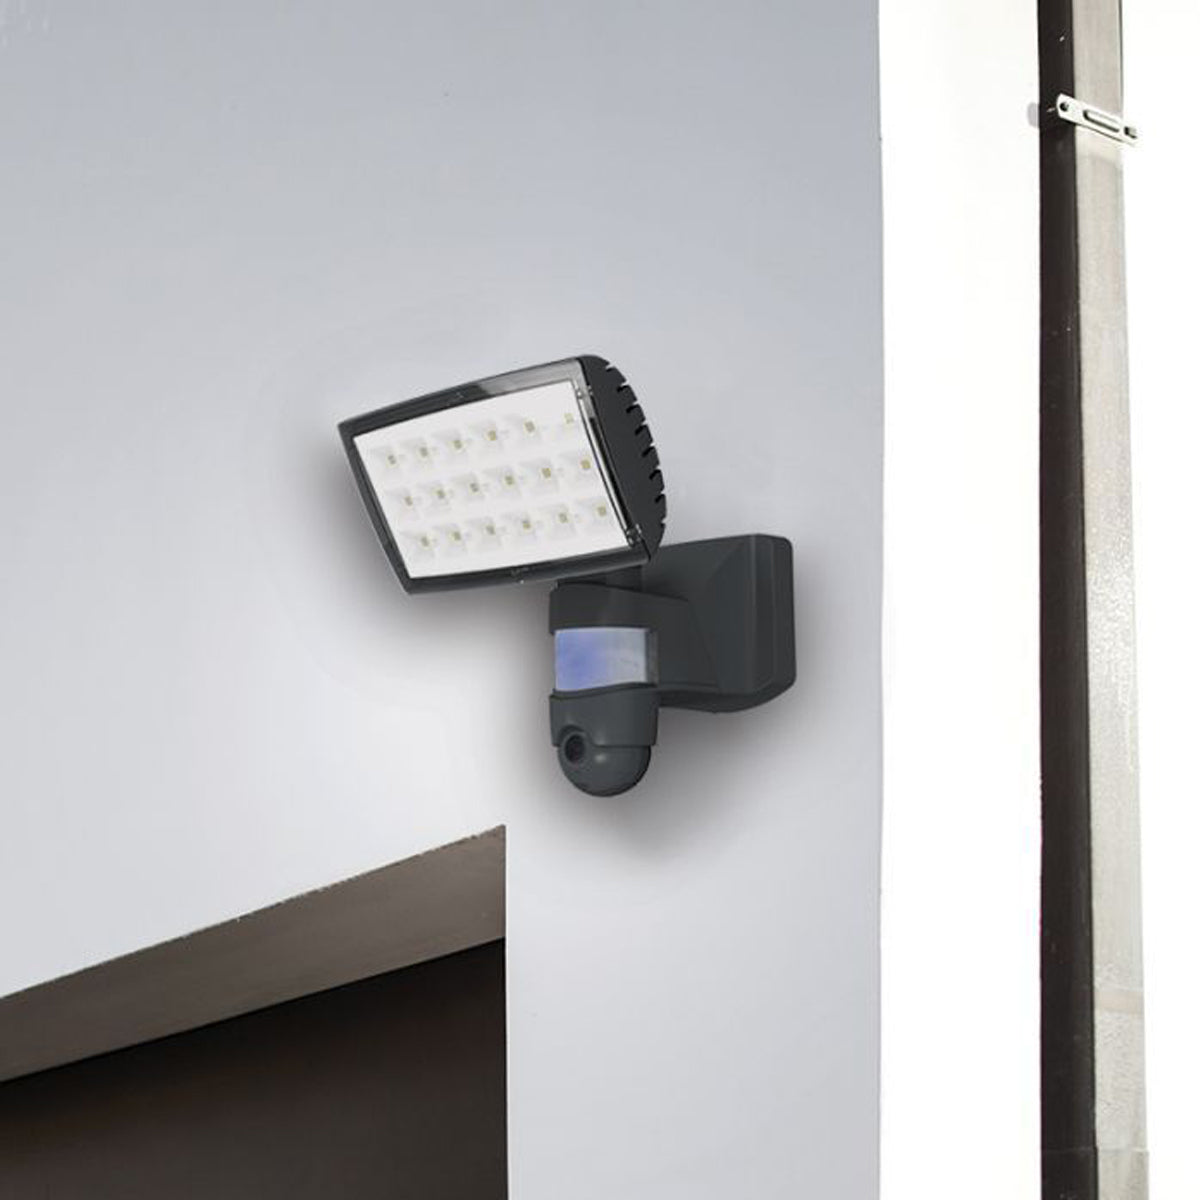 CGC LAUREN Dark Grey LED Floodlight CCTV Camera With App Control